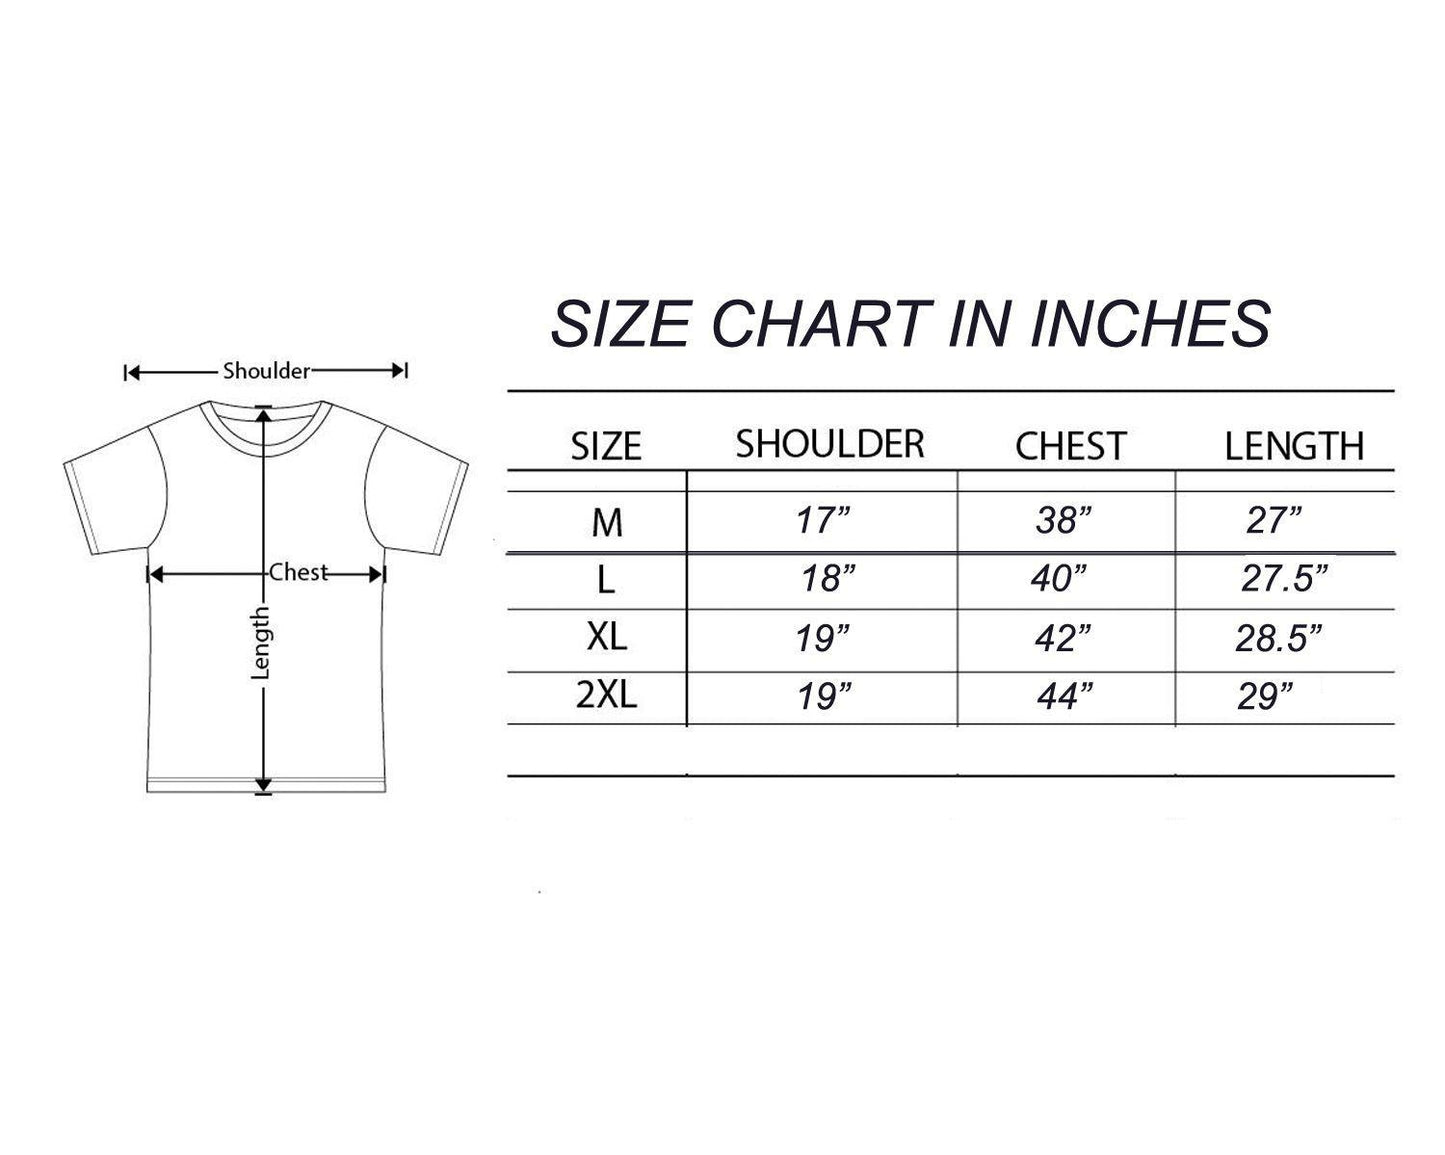 Cotton Full Sleeves Stylish Tshirt For Men's (Pack of 5)